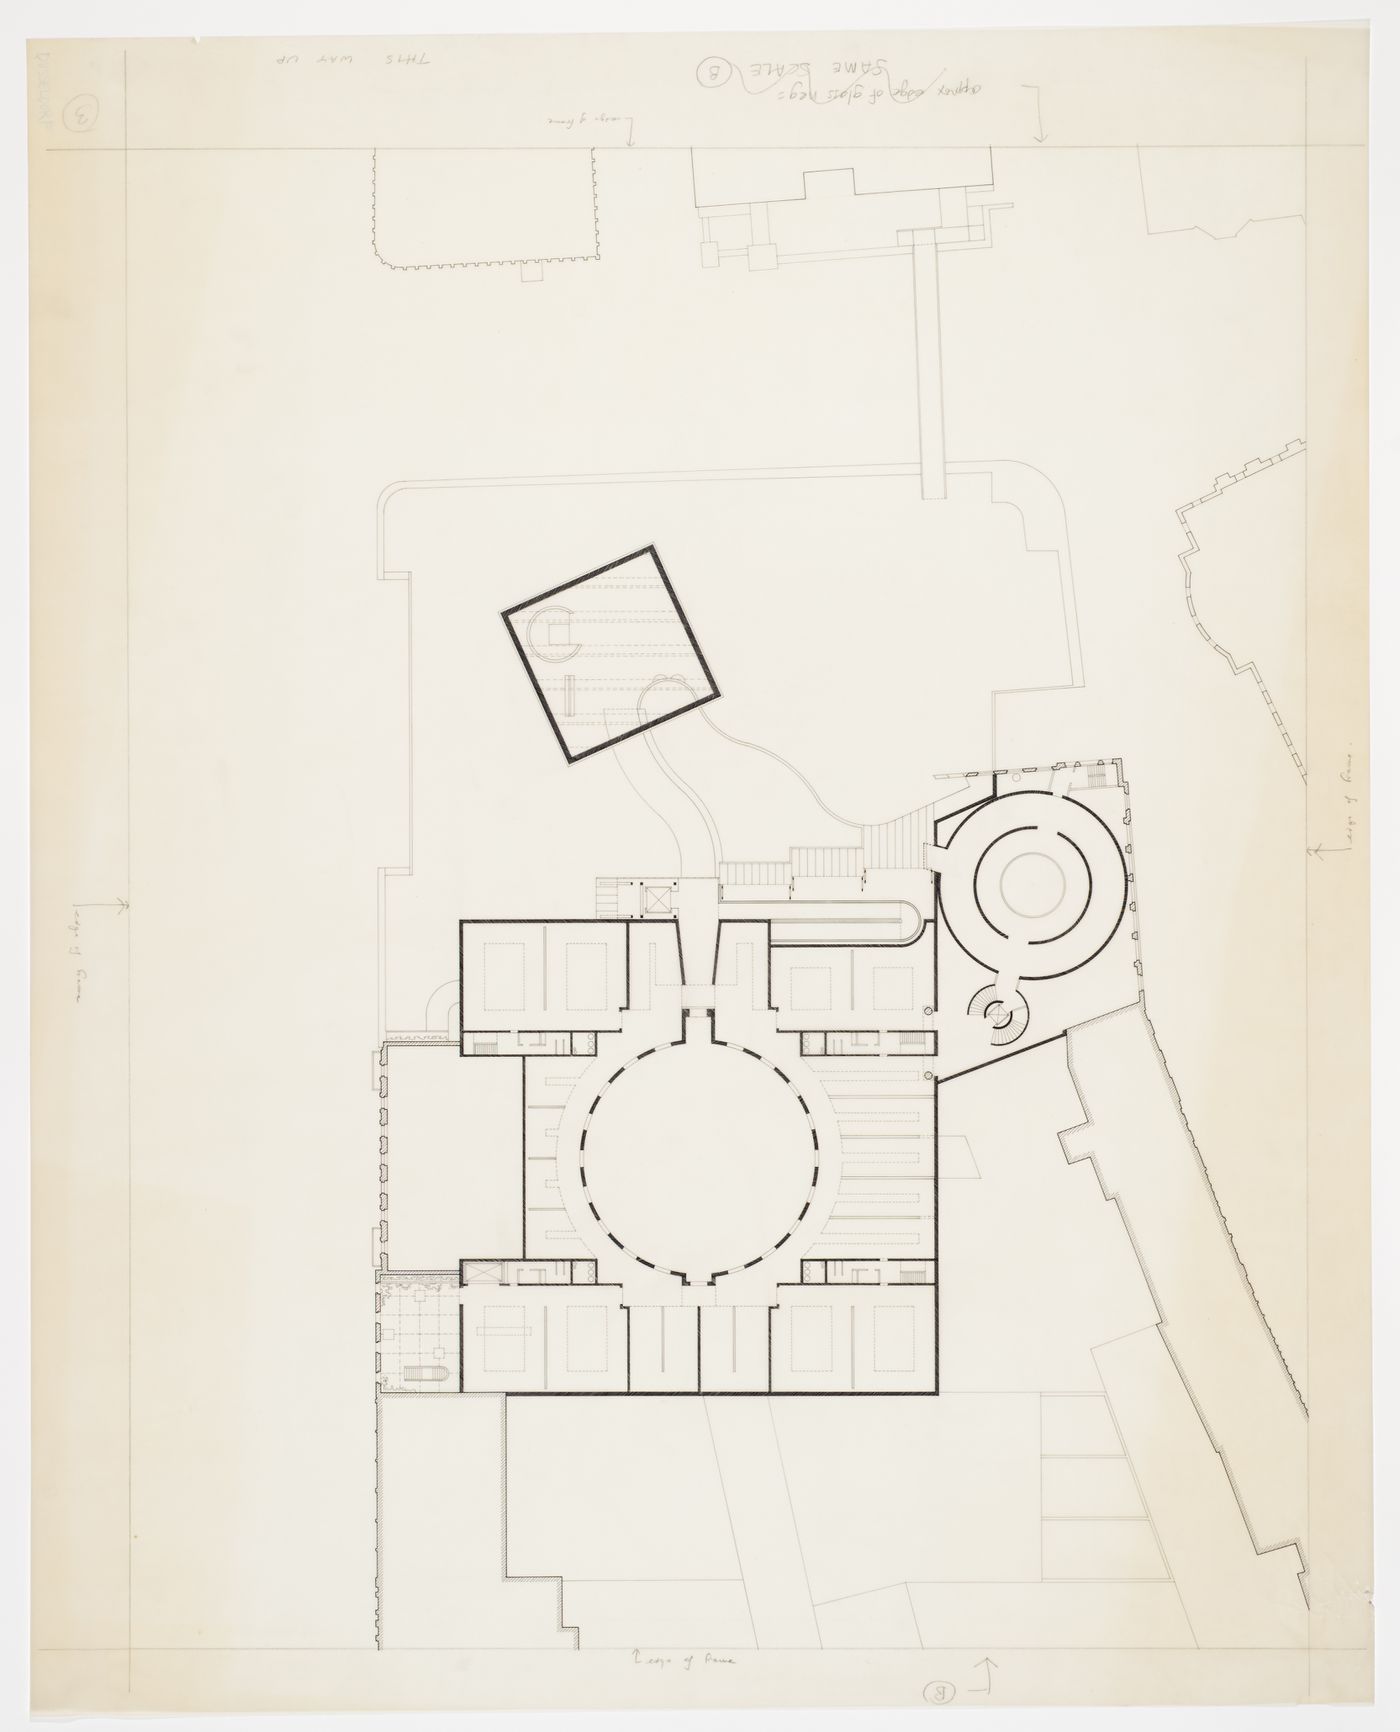 Nordrhein-Westfalen Museum, Dusseldorf, Germany: gallery level plan